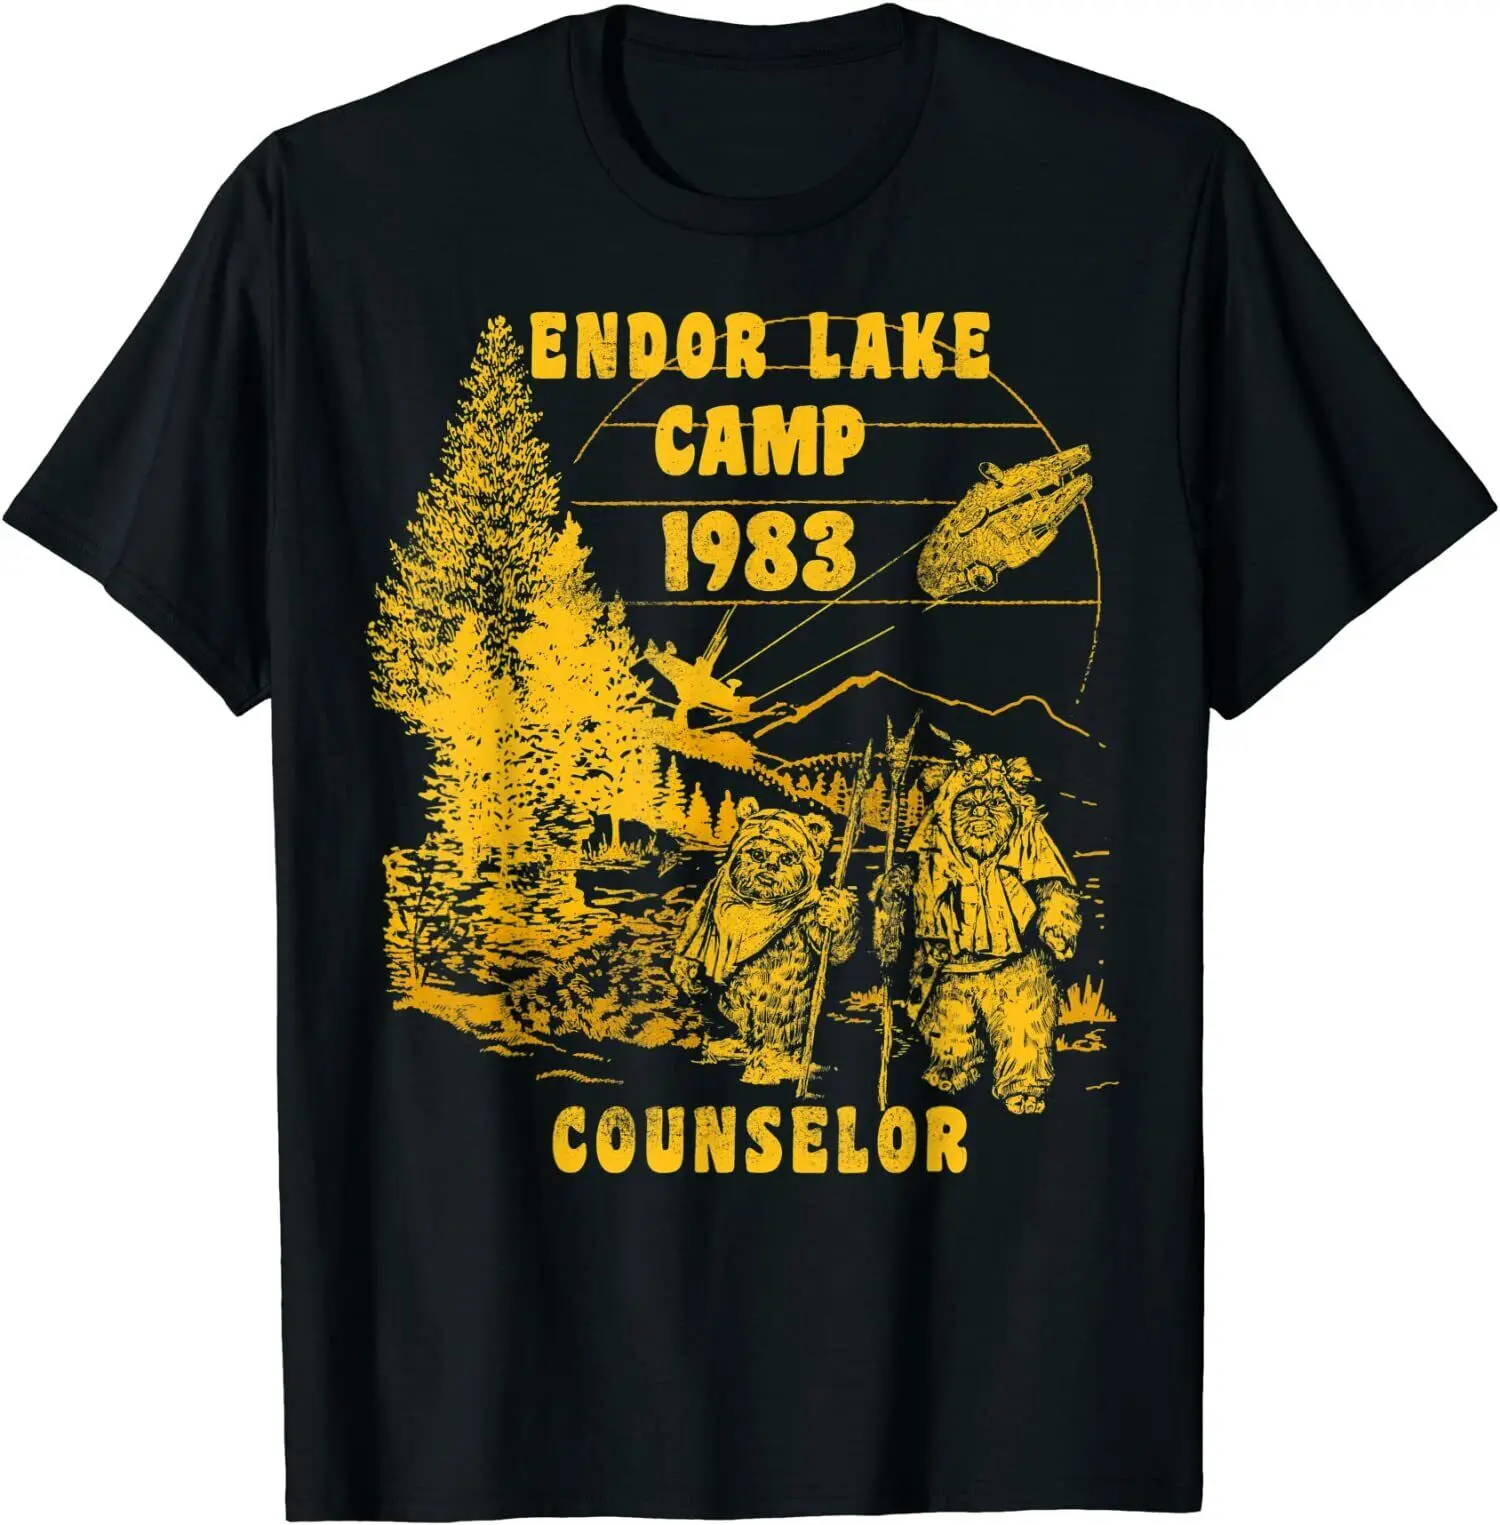 

Endor Lake 83 Camp Counselor Graphic Men's T Shirt Droshipping Fashion O-Neck Short Sleeve Tee Loose Print T Shirt Clothes